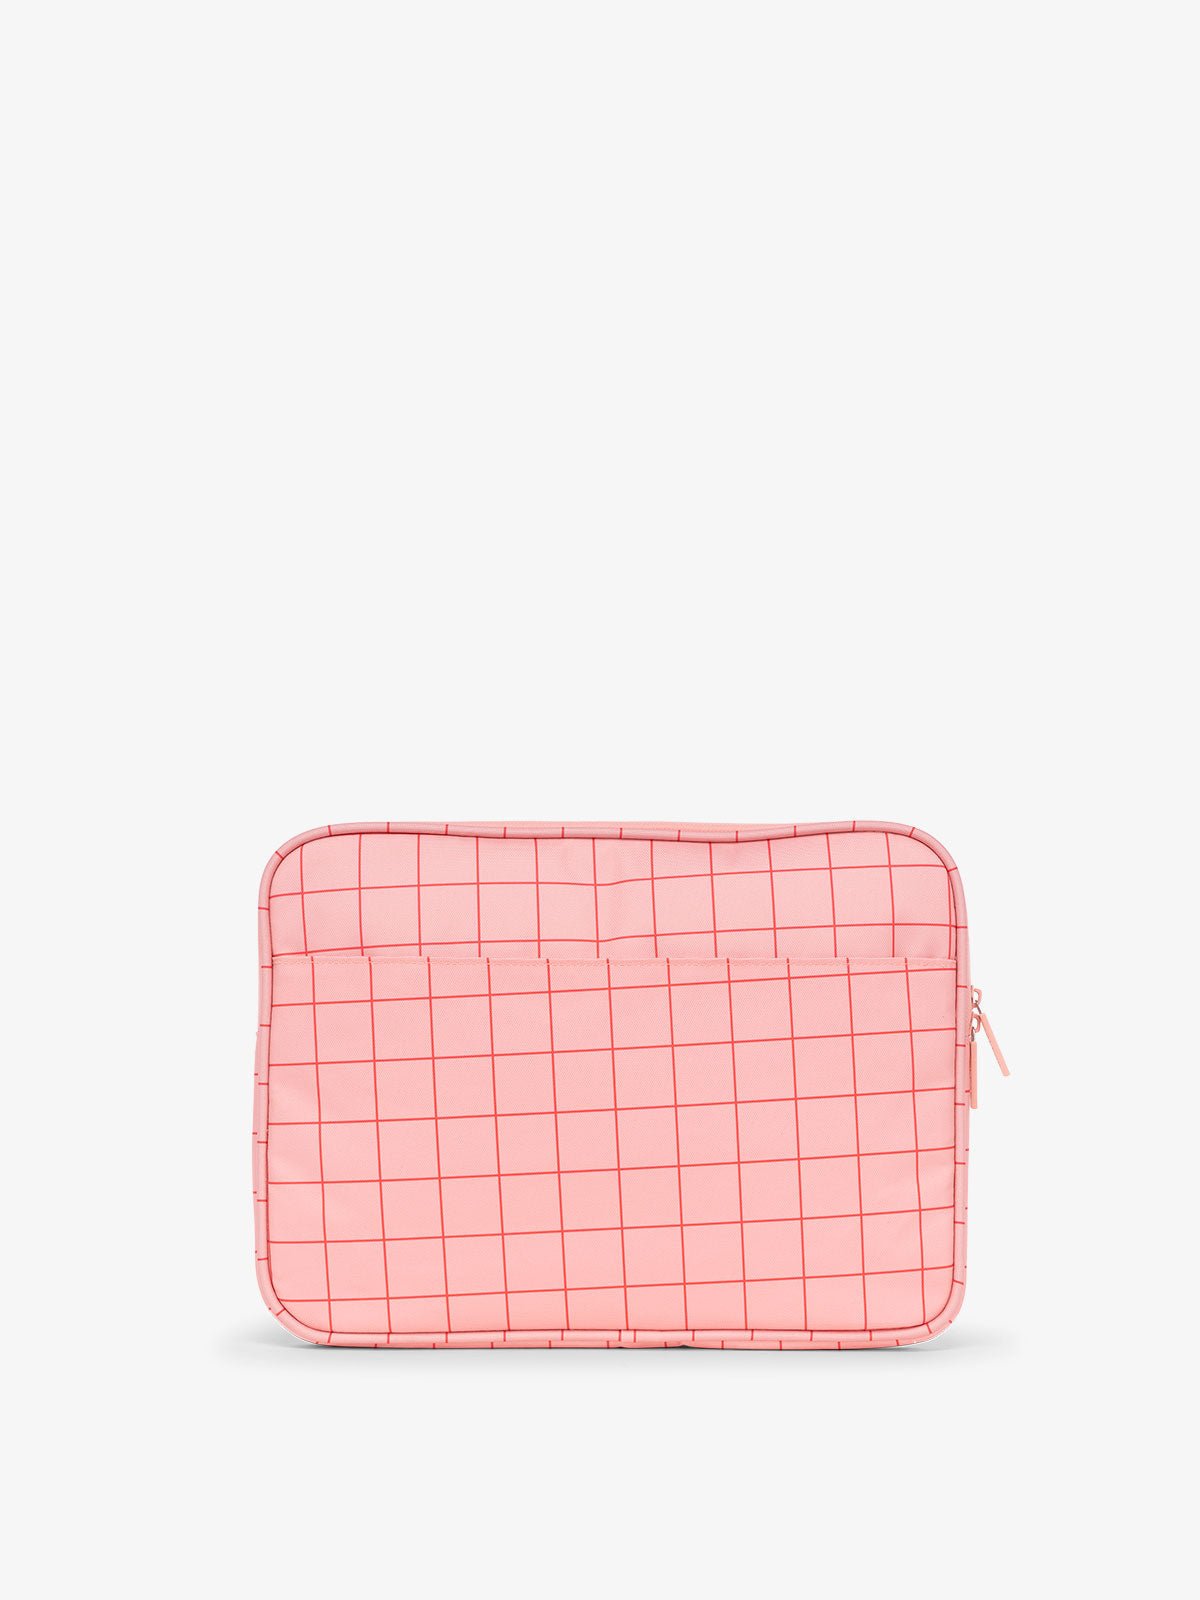 CALPAK 13-14 Inch padded Laptop sleeve for school in pink grid pattern